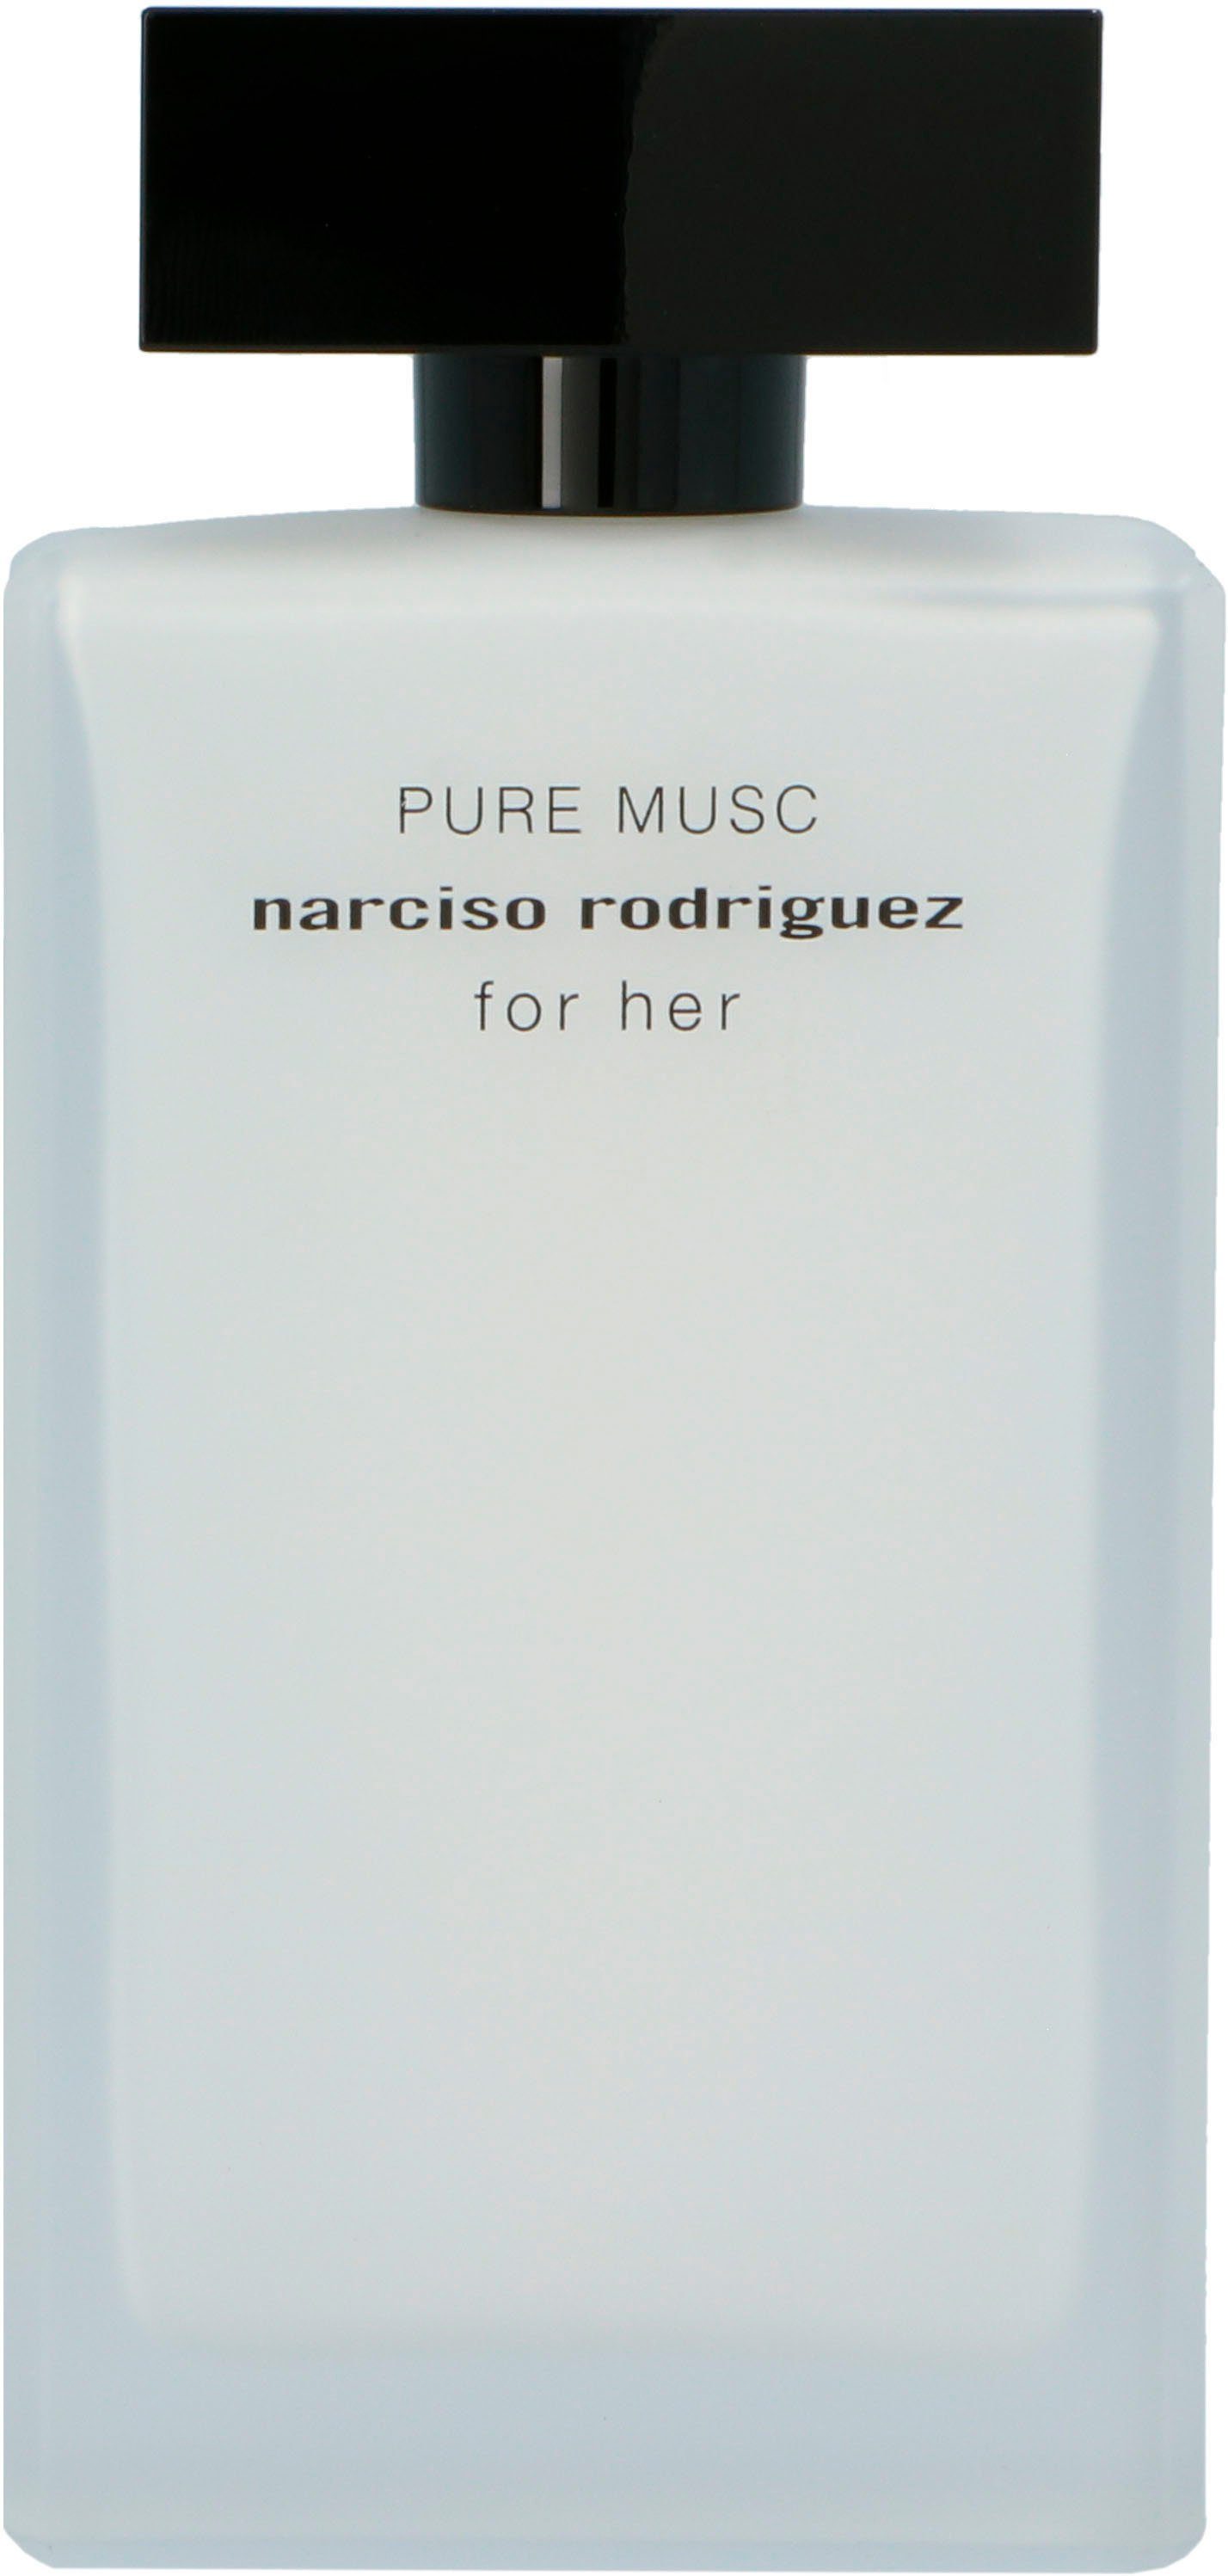 de narciso Parfum Eau rodriguez Her Rodriguez Narciso Musc for Pure